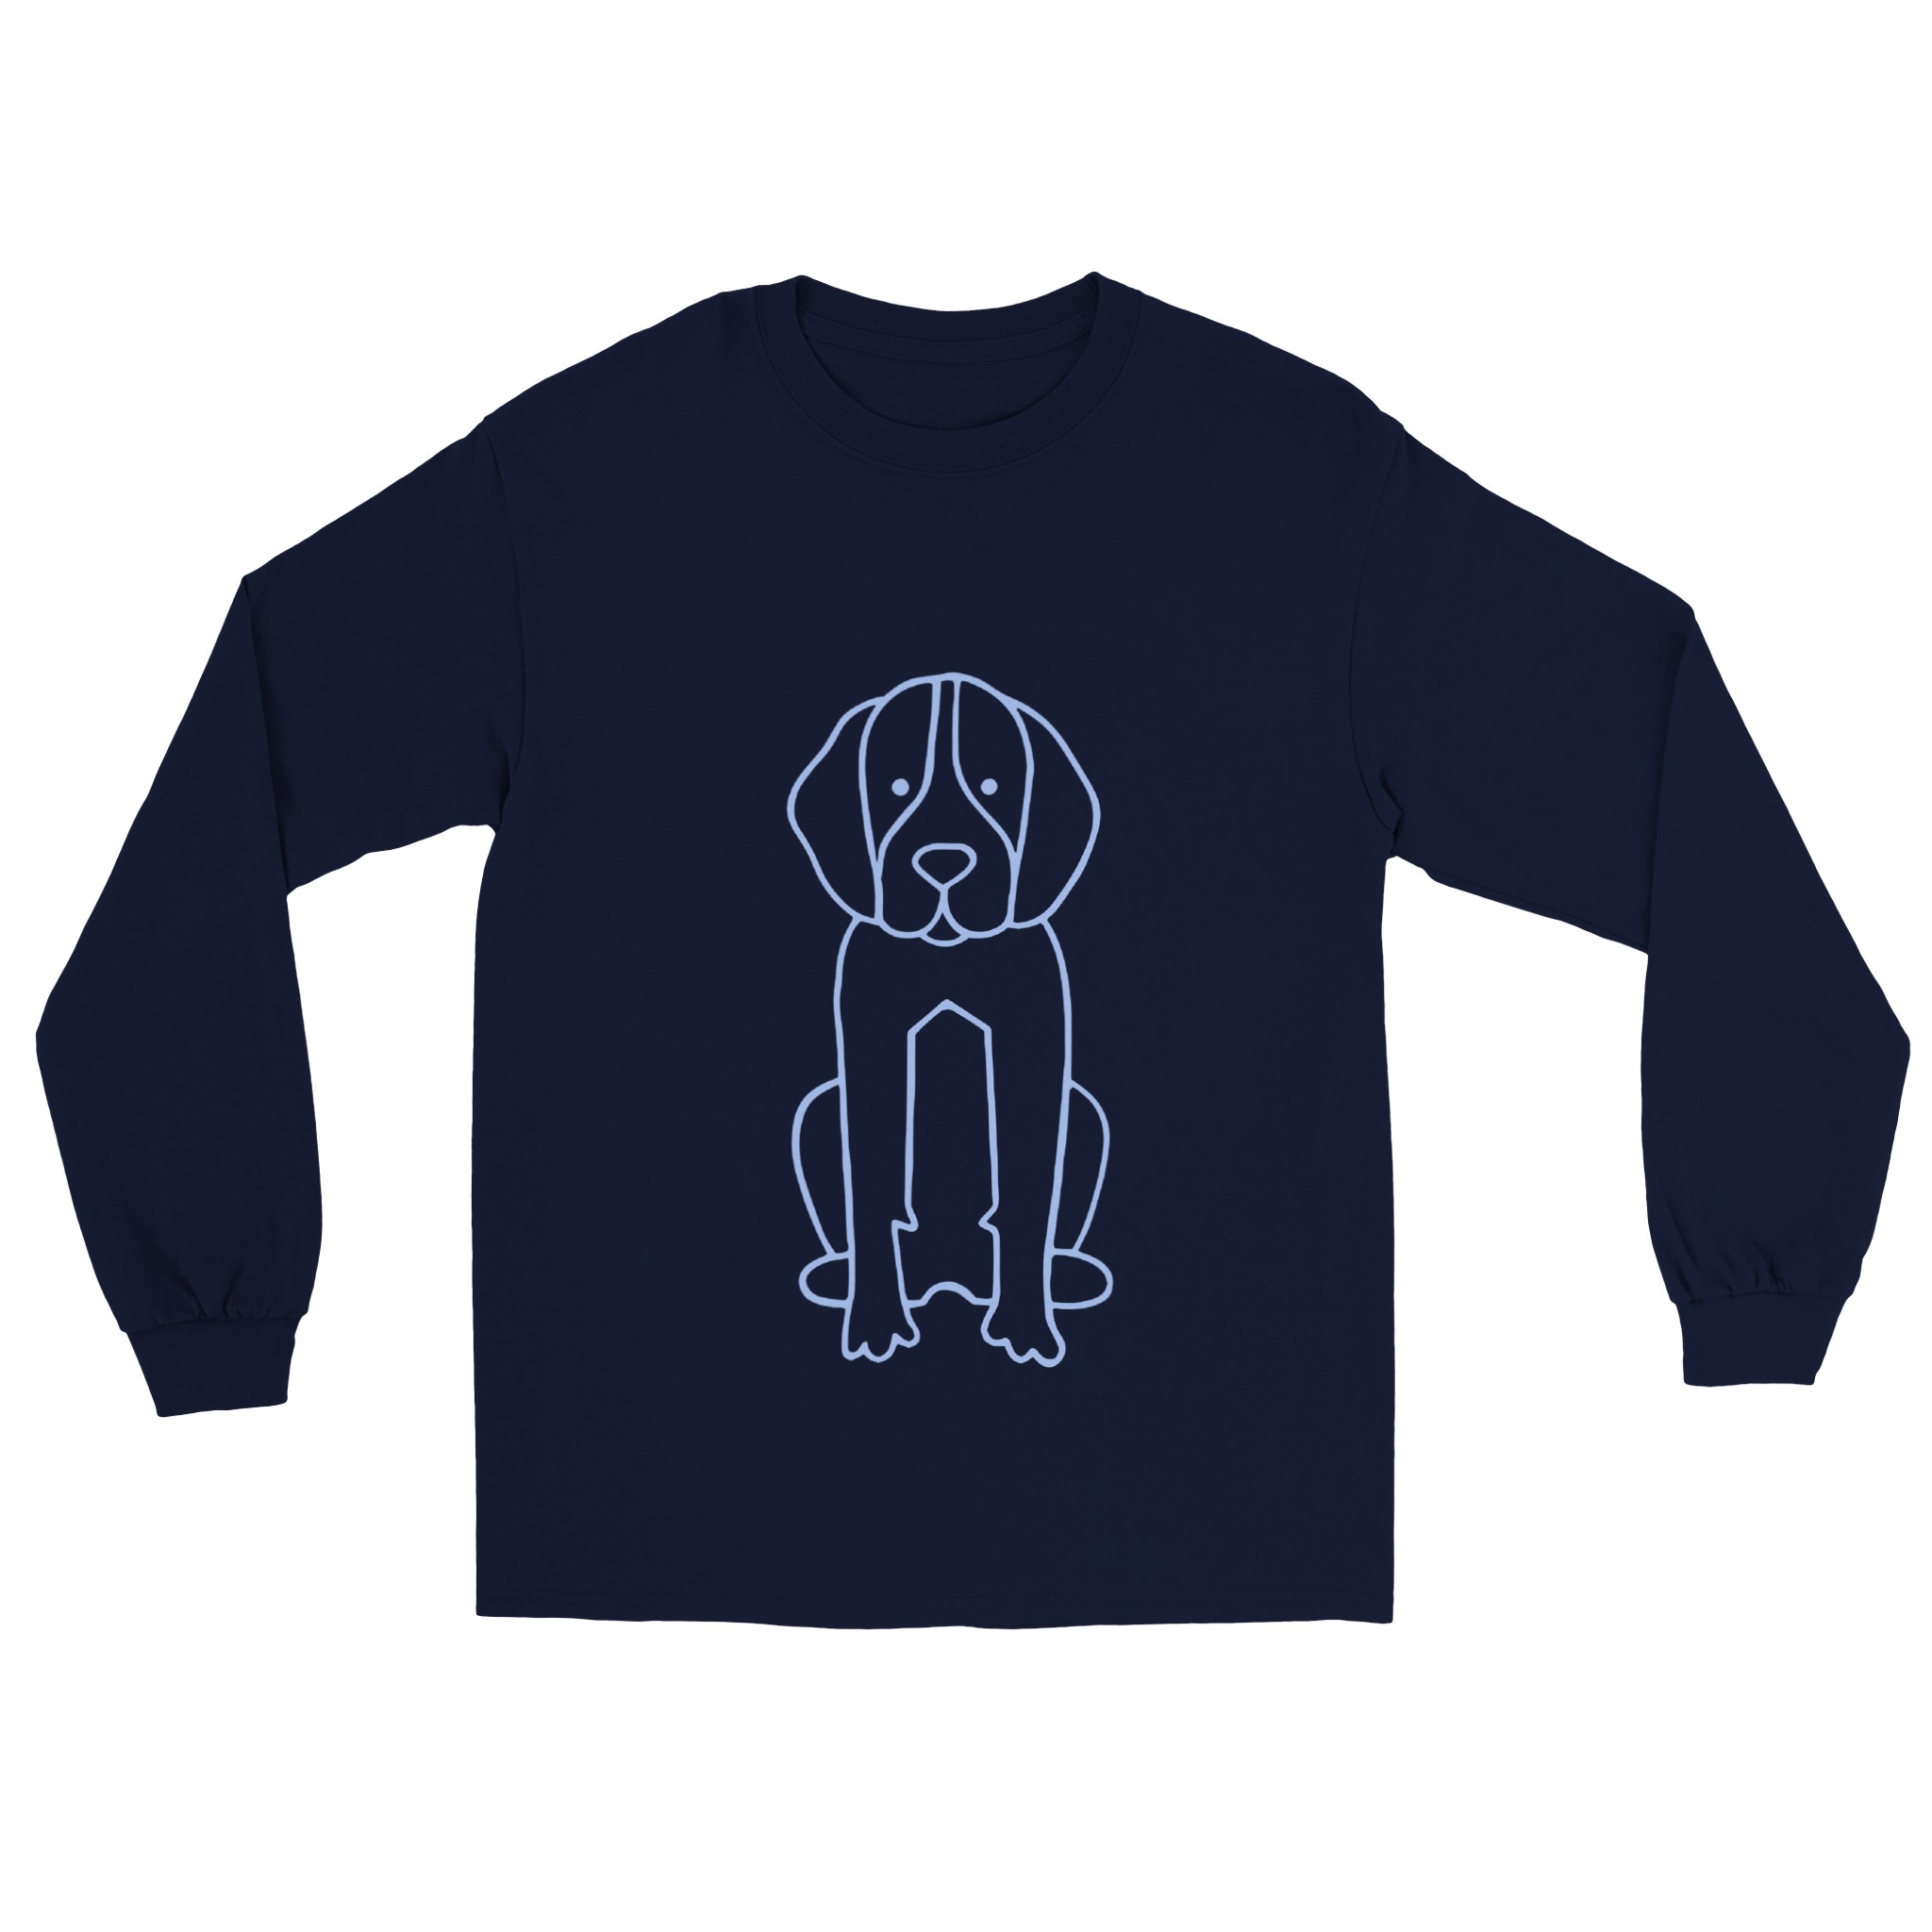 Classic Unisex Longsleeve T-shirt - Dog design